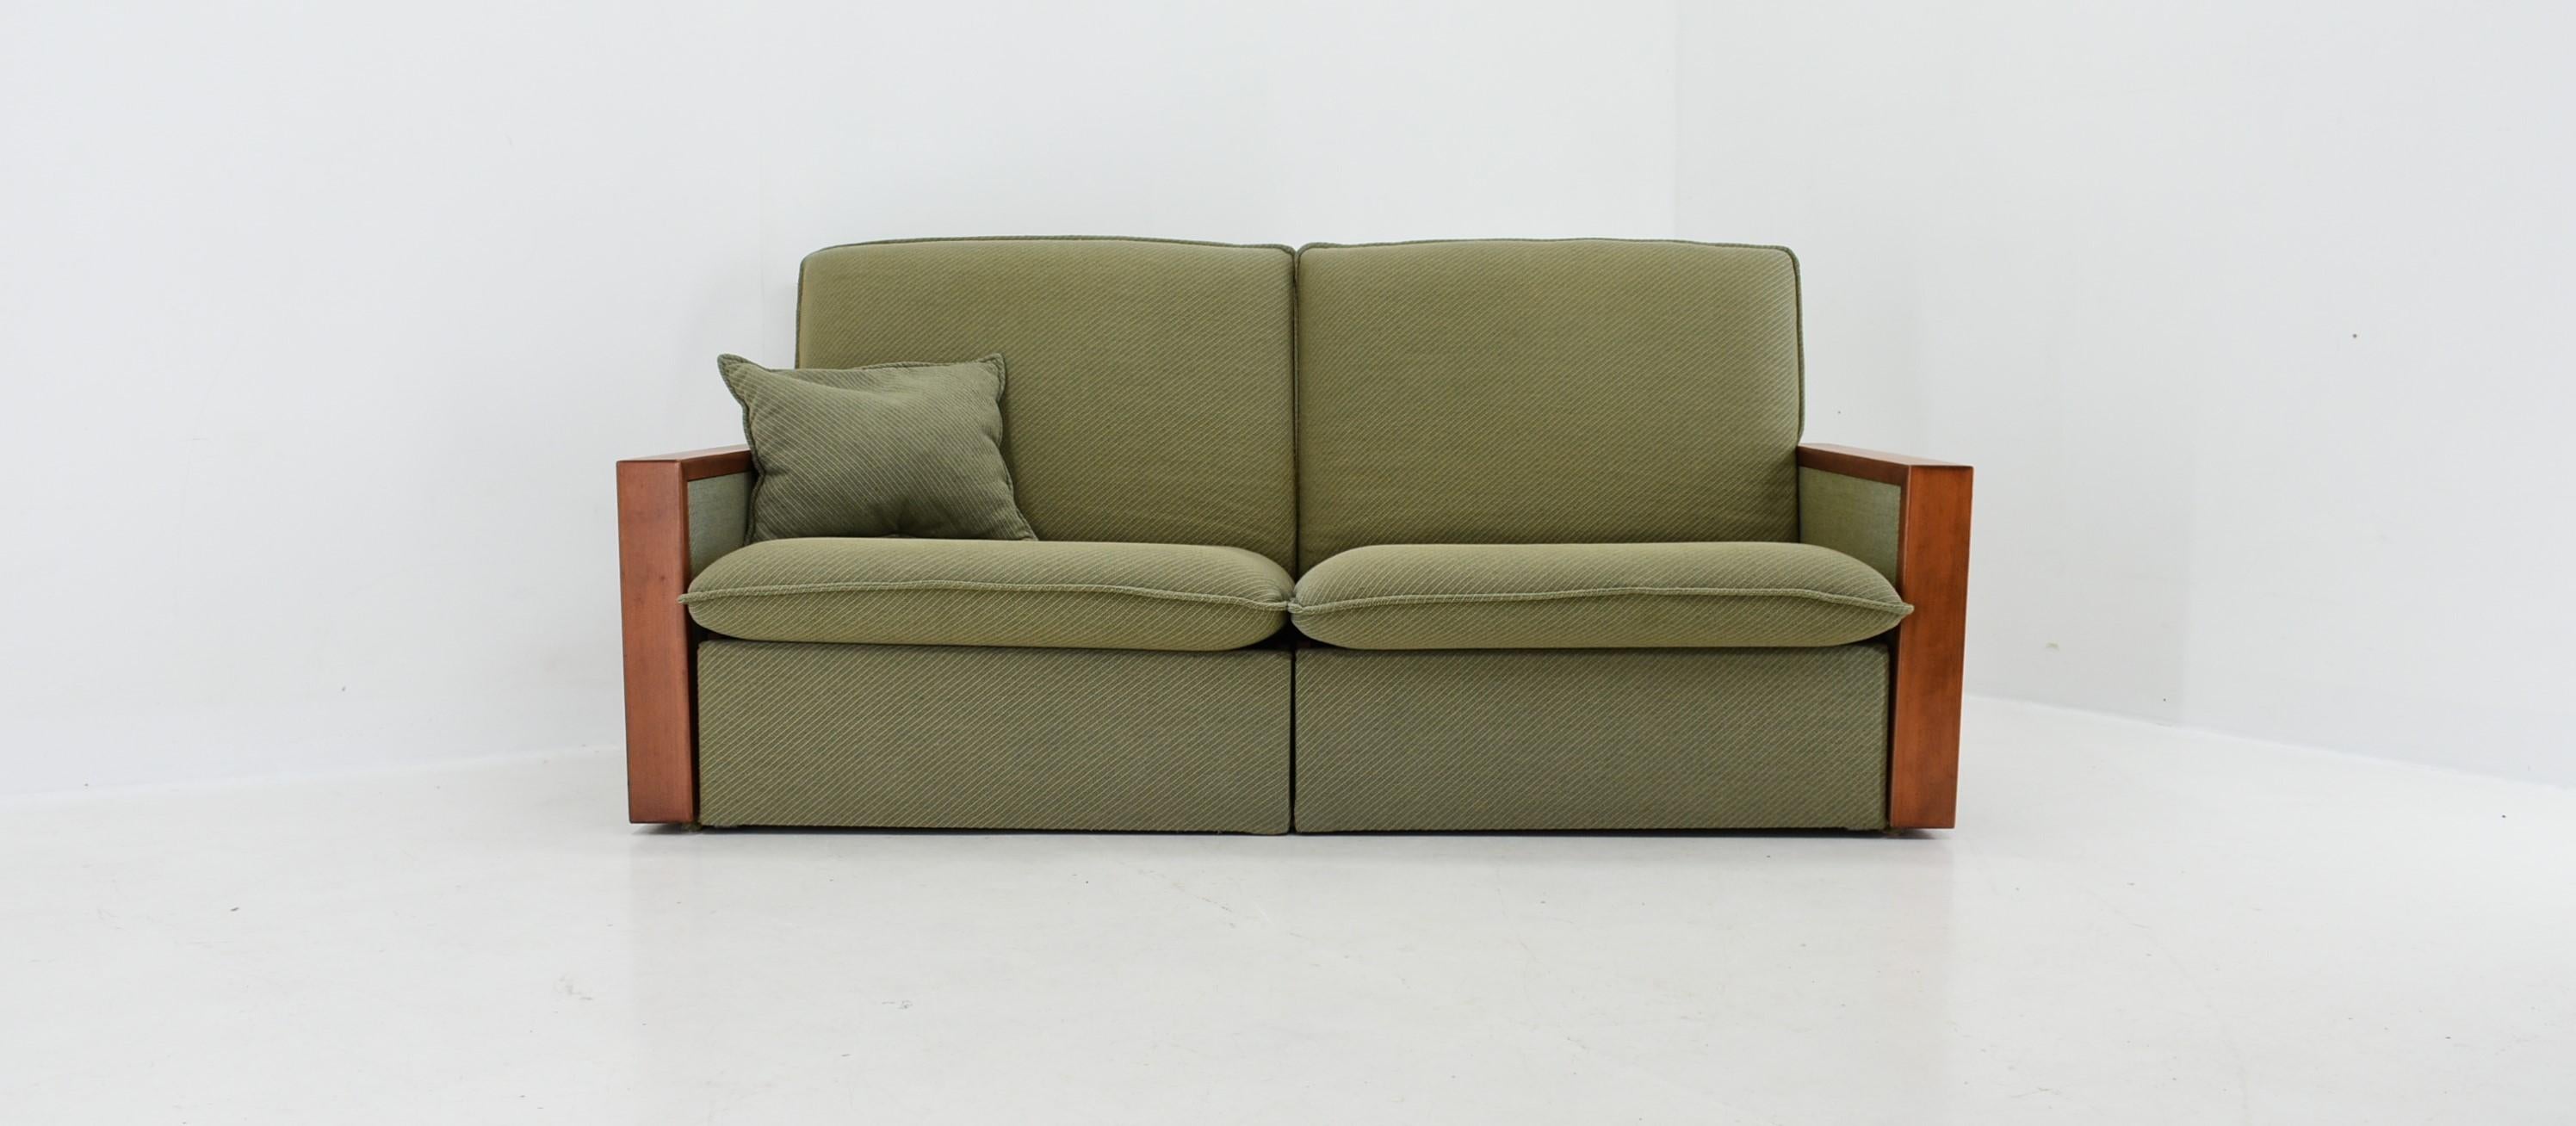 1960s, Miroslav Navratil Convertible Sofa, Czechoslovakia For Sale 5